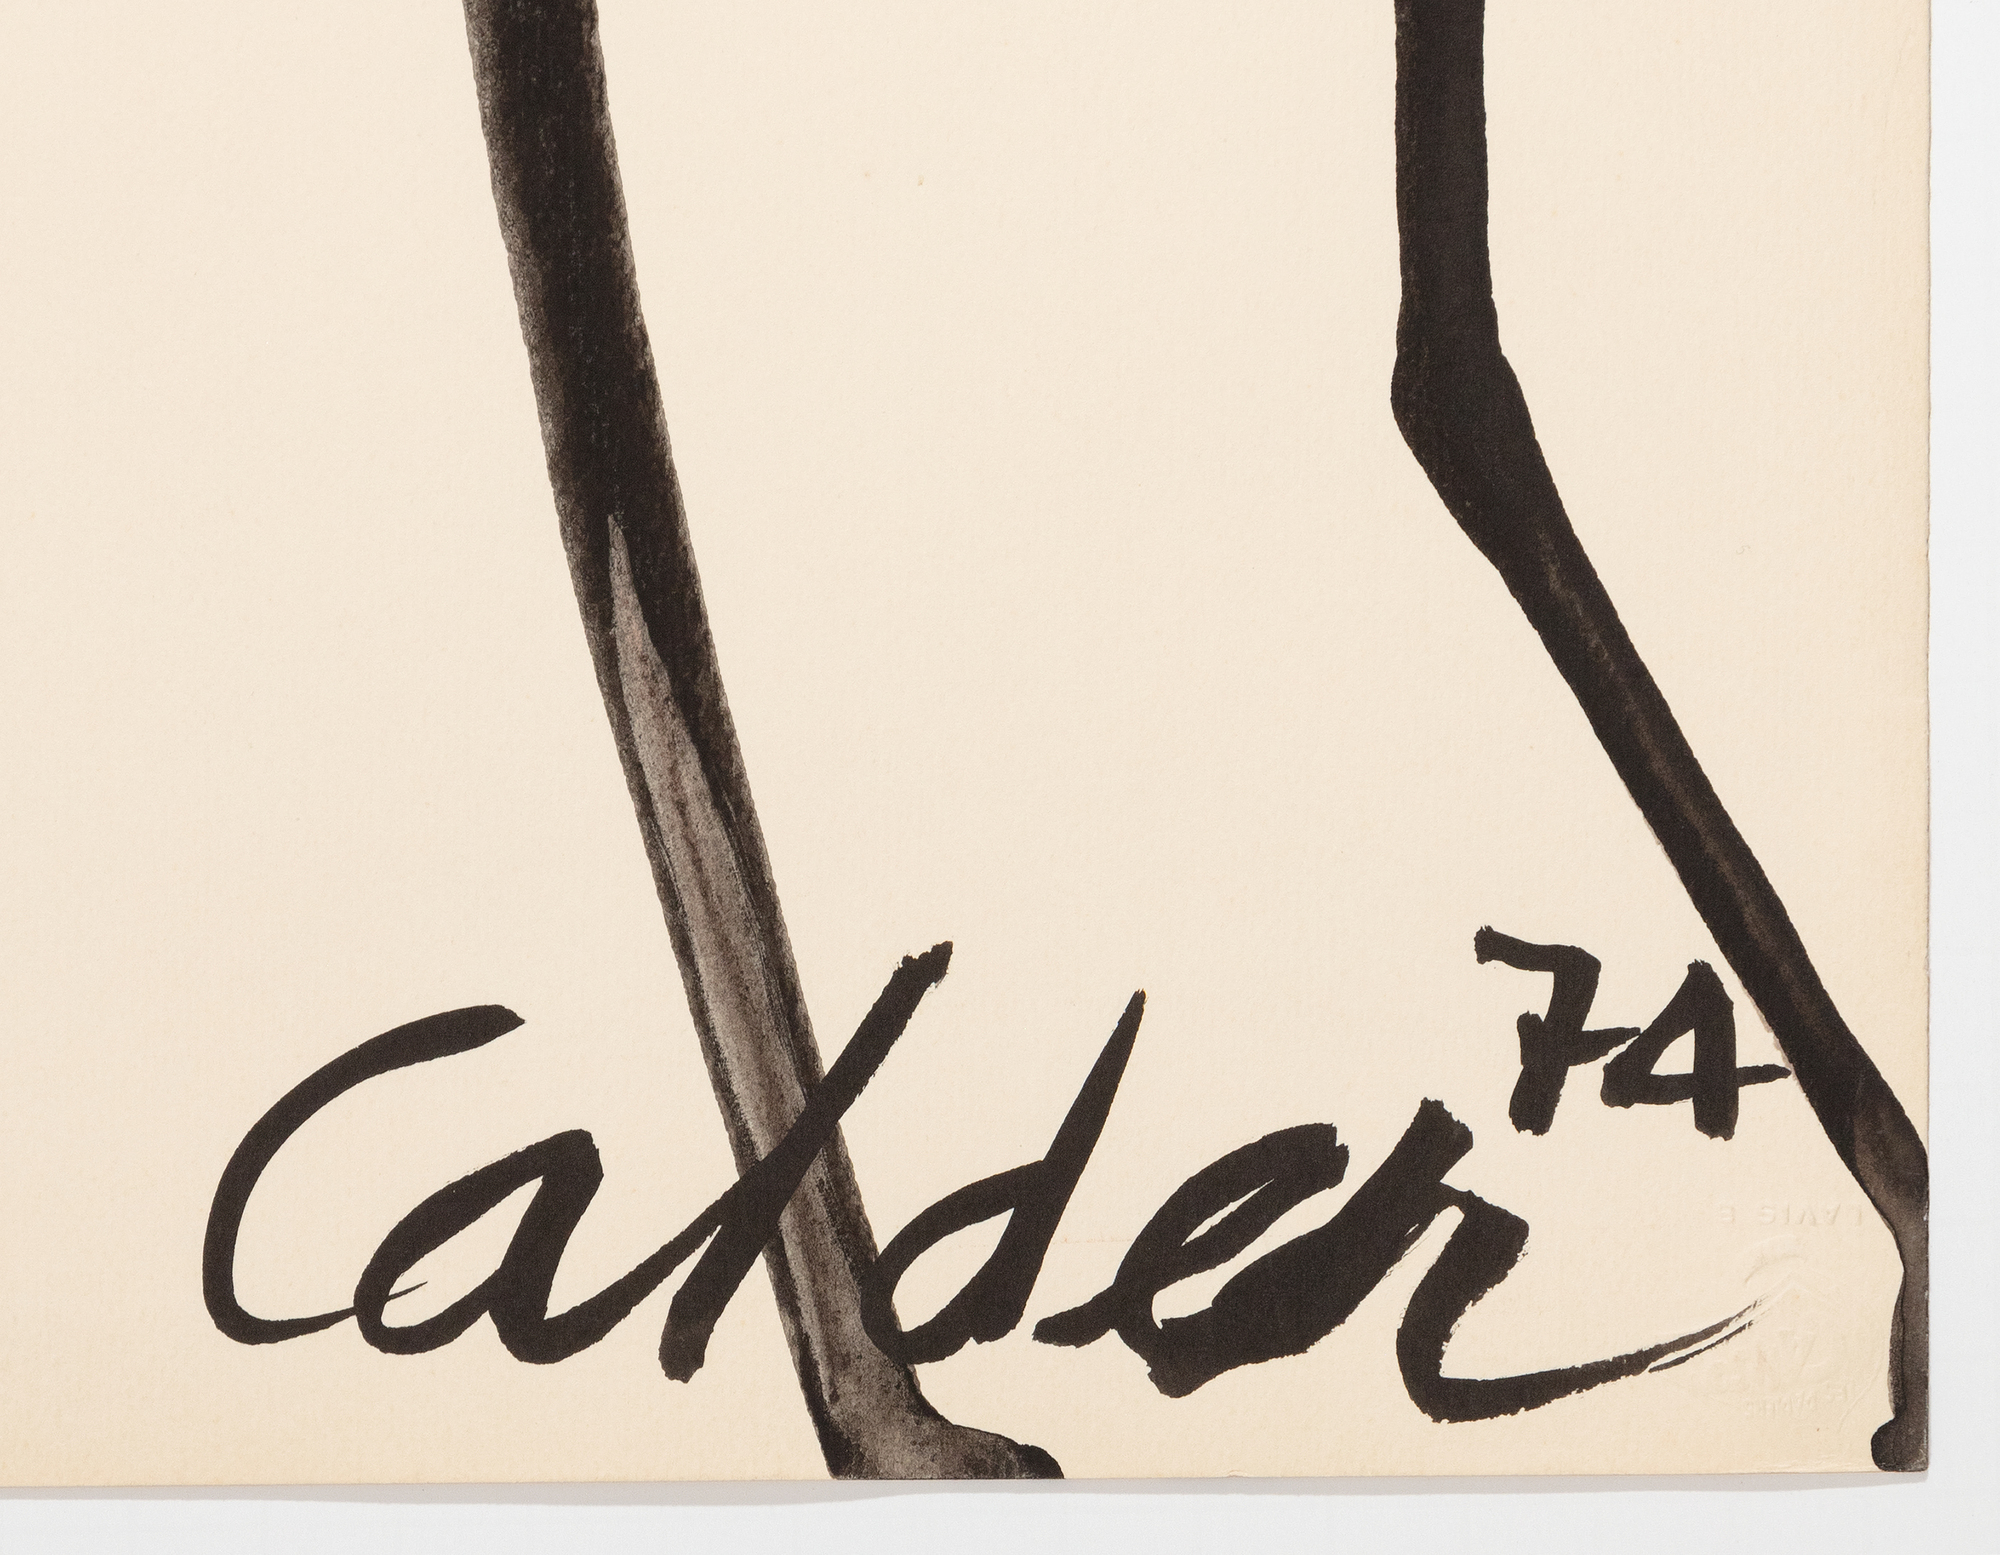 © 2023 Calder Foundation, New York / Artists Rights Society (ARS), New York